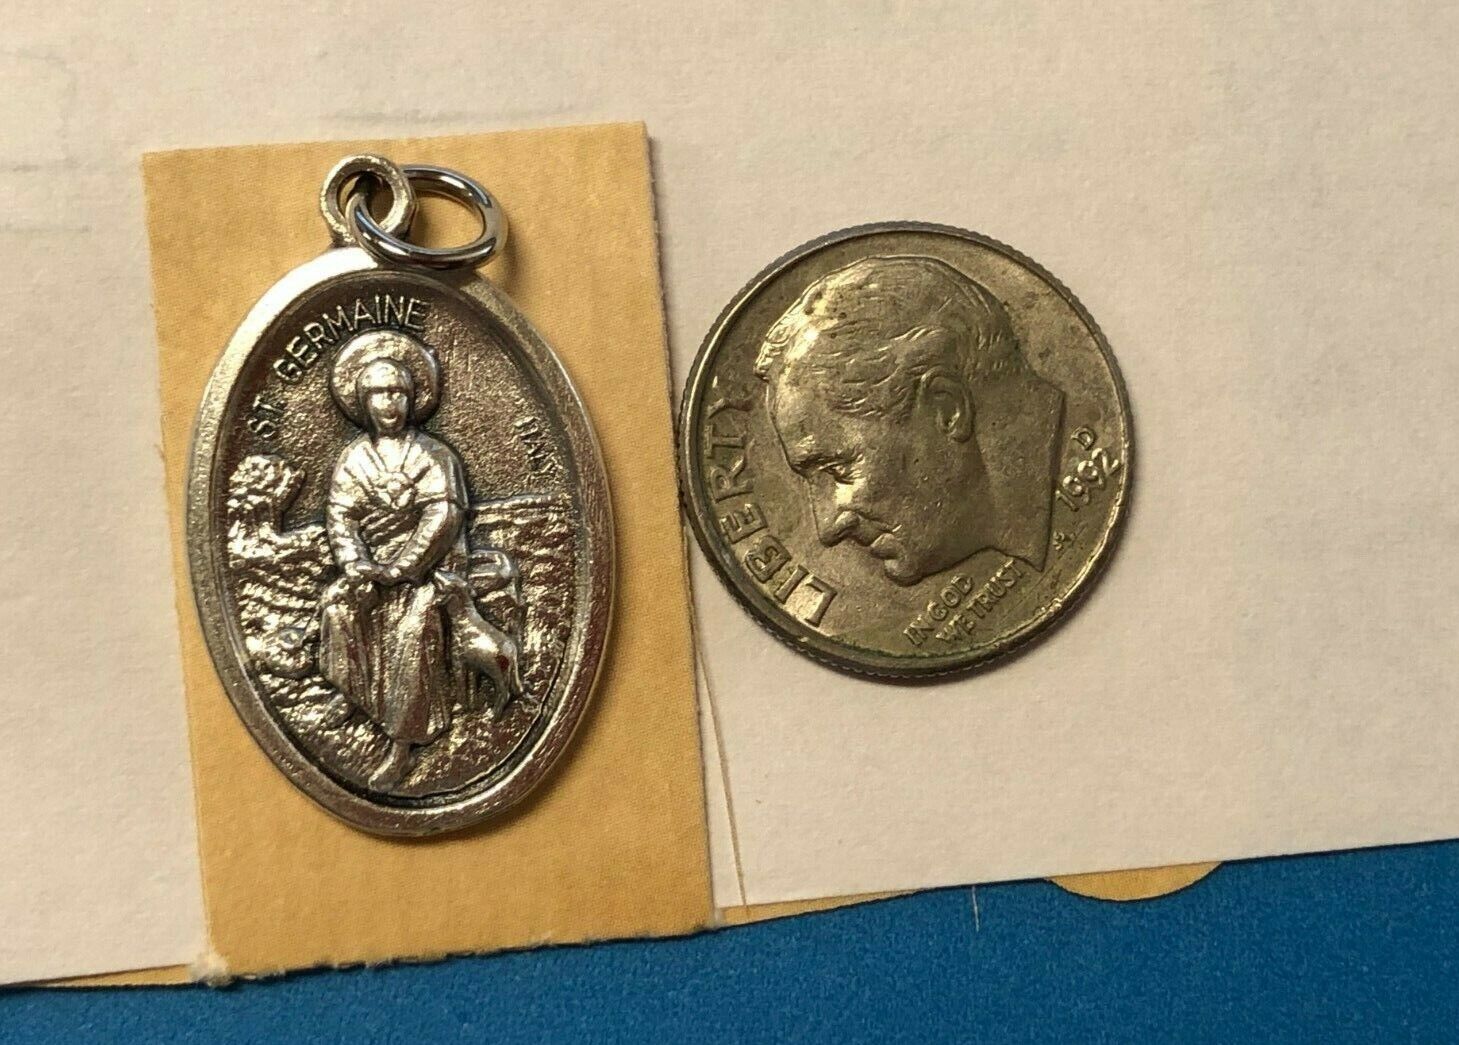 Saint Germaine de Pibrac Novena Prayer Card with Medal, New - Bob and Penny Lord